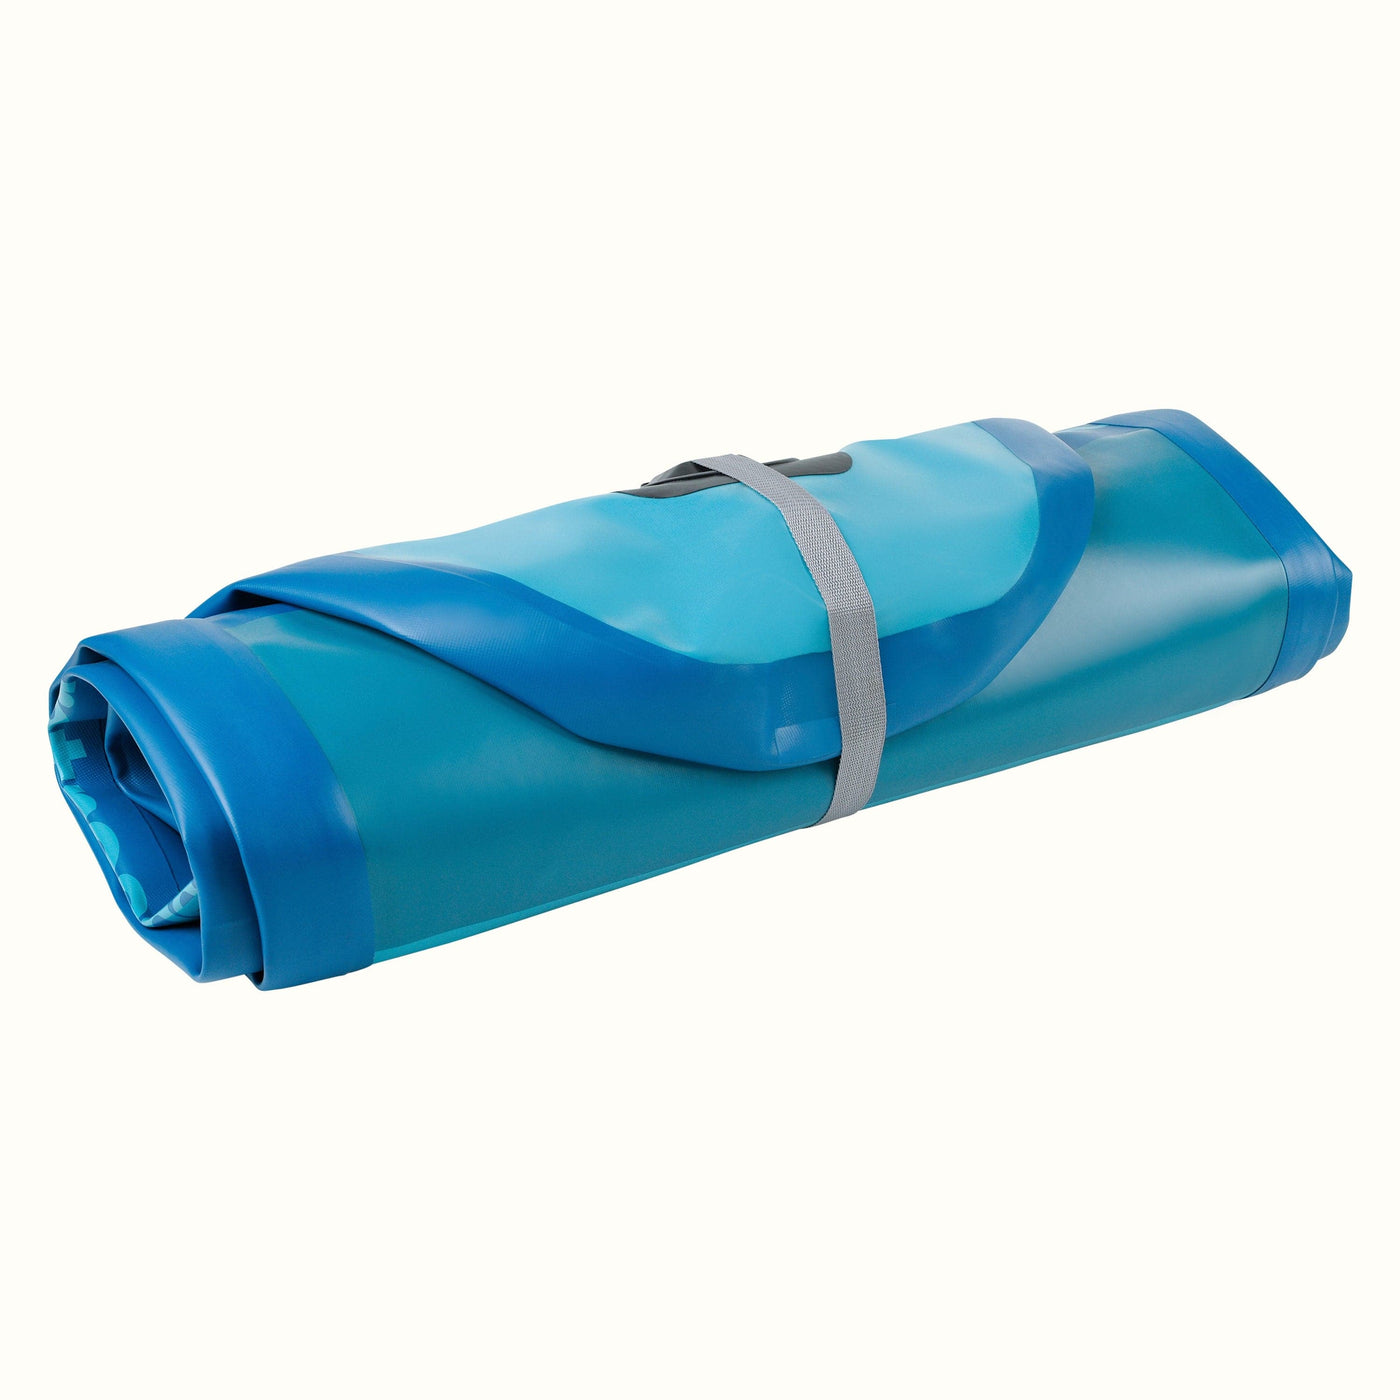 Weekender Inflatable Paddle Board 10' | Nautical Blue